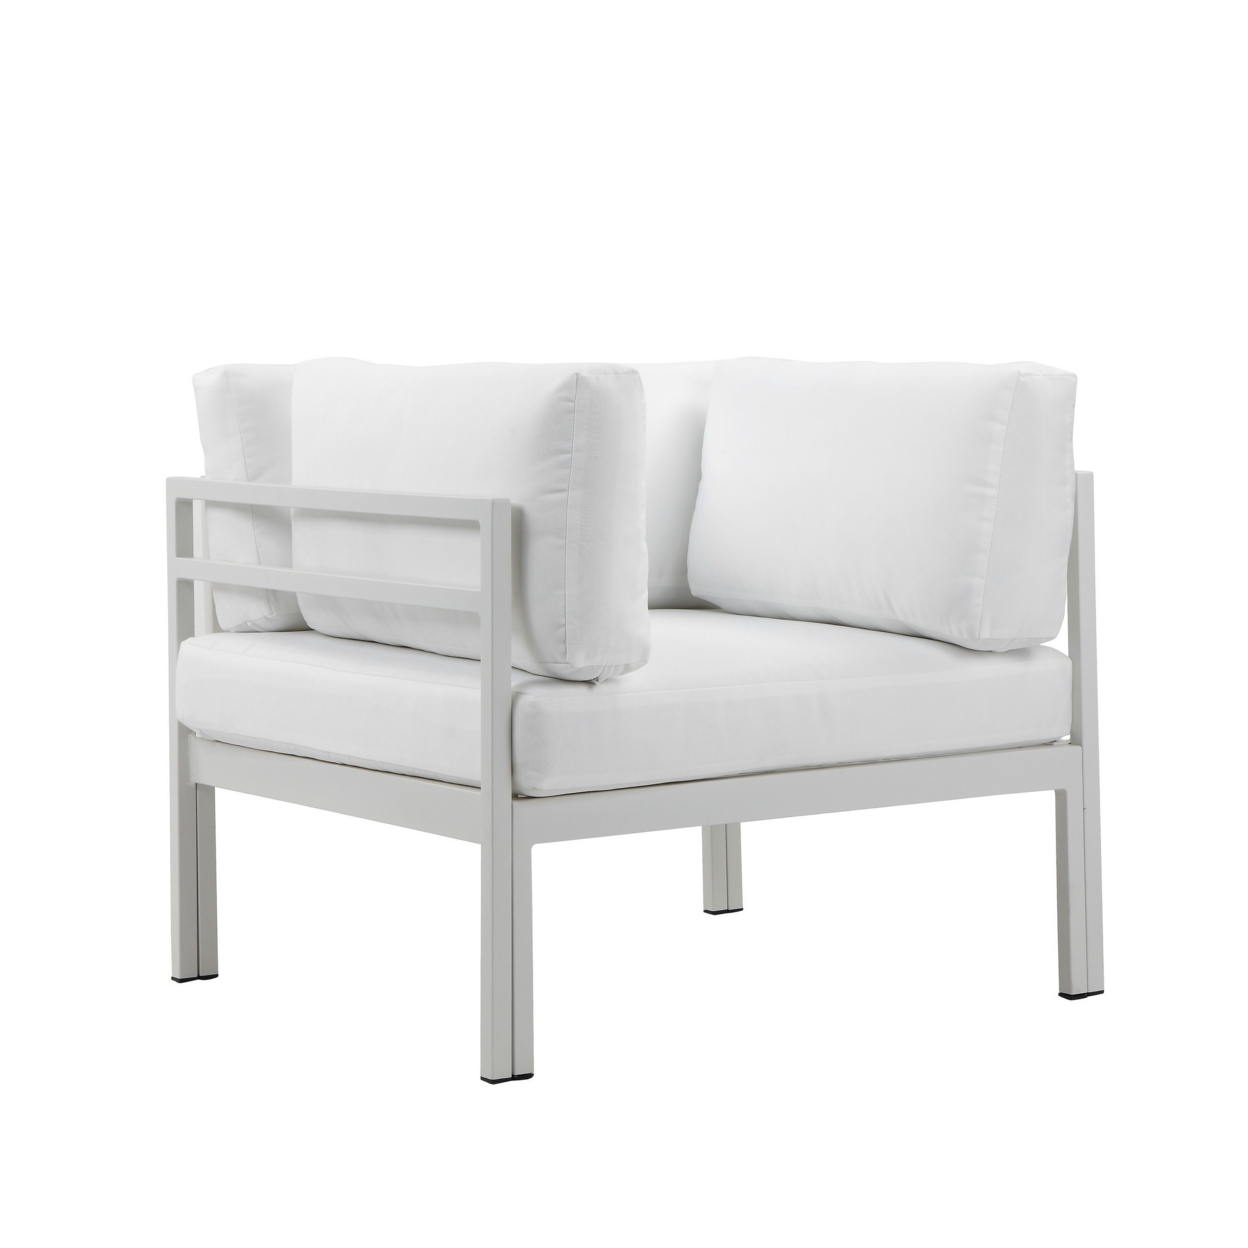 Cilo 34 Inch Outdoor Armchair, White Aluminum, Water Resistant Cushions- Saltoro Sherpi